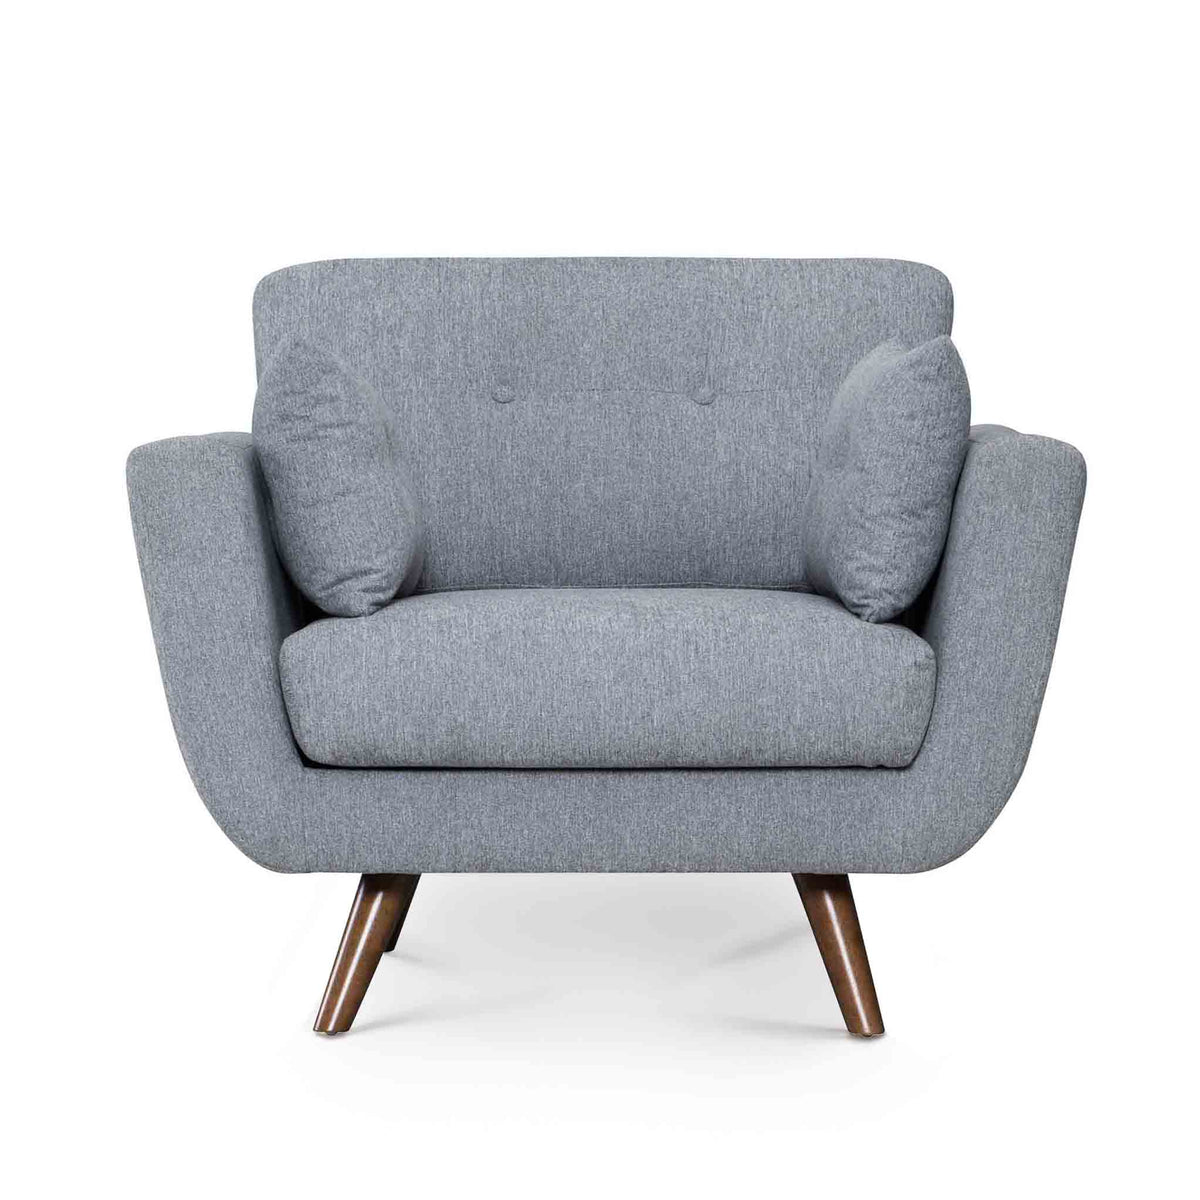 Trom Grey Scandinavian style fabric armchair by Roseland Furniture